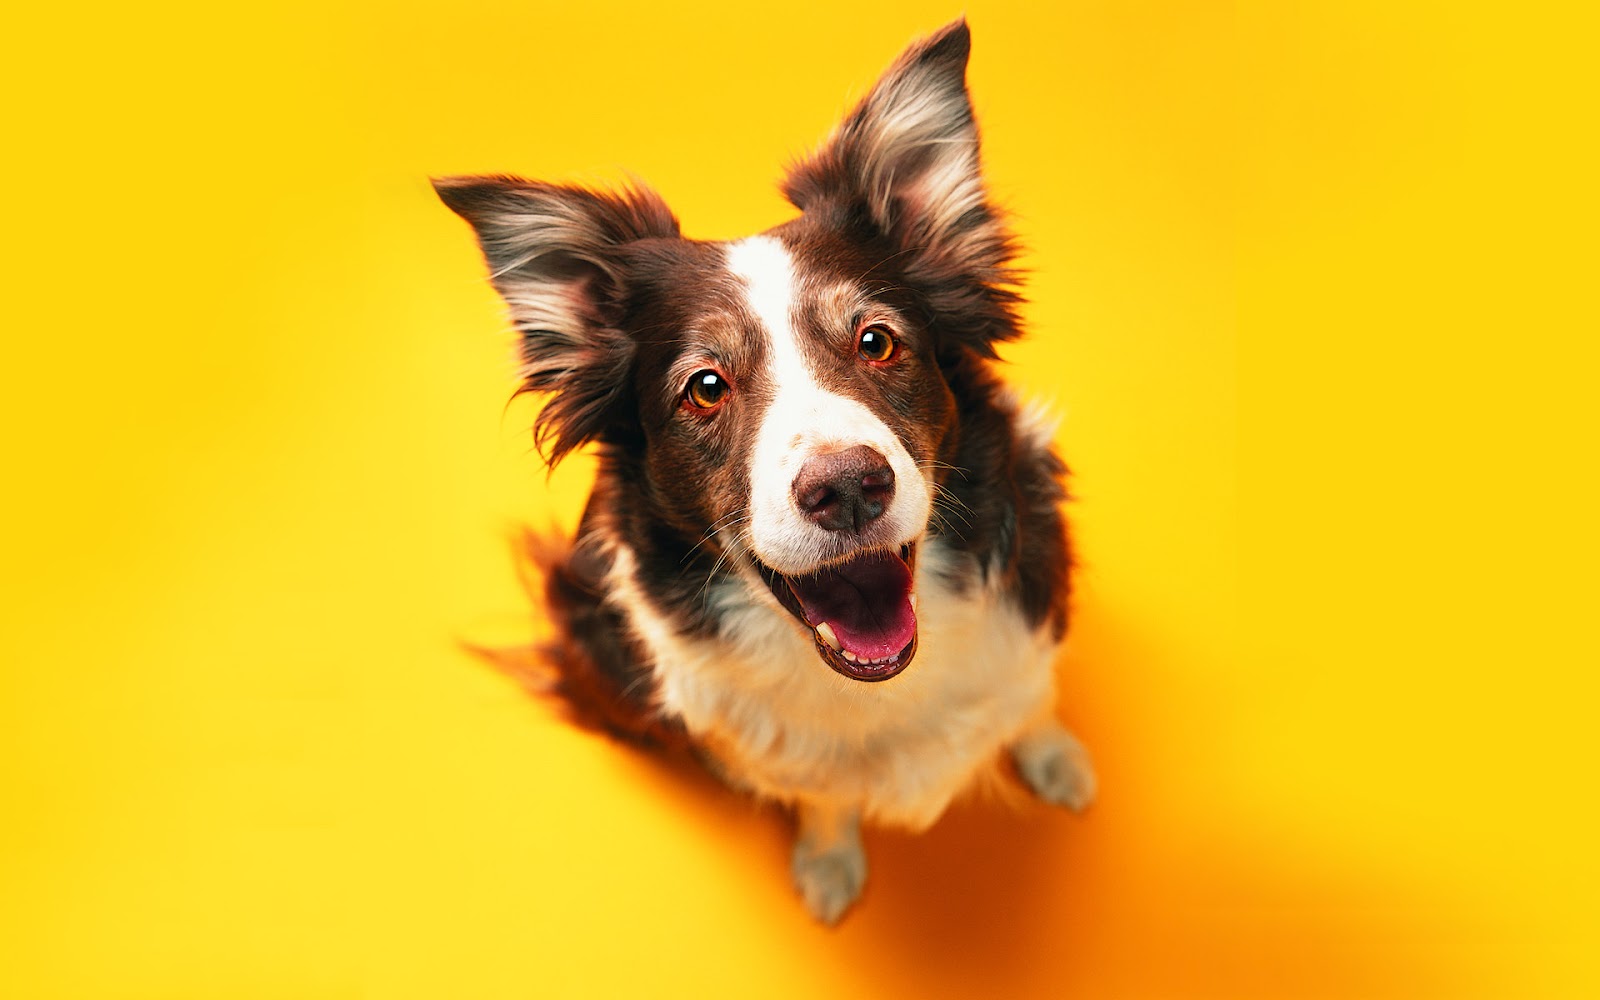 mobile desktop background funny looking dog pics download